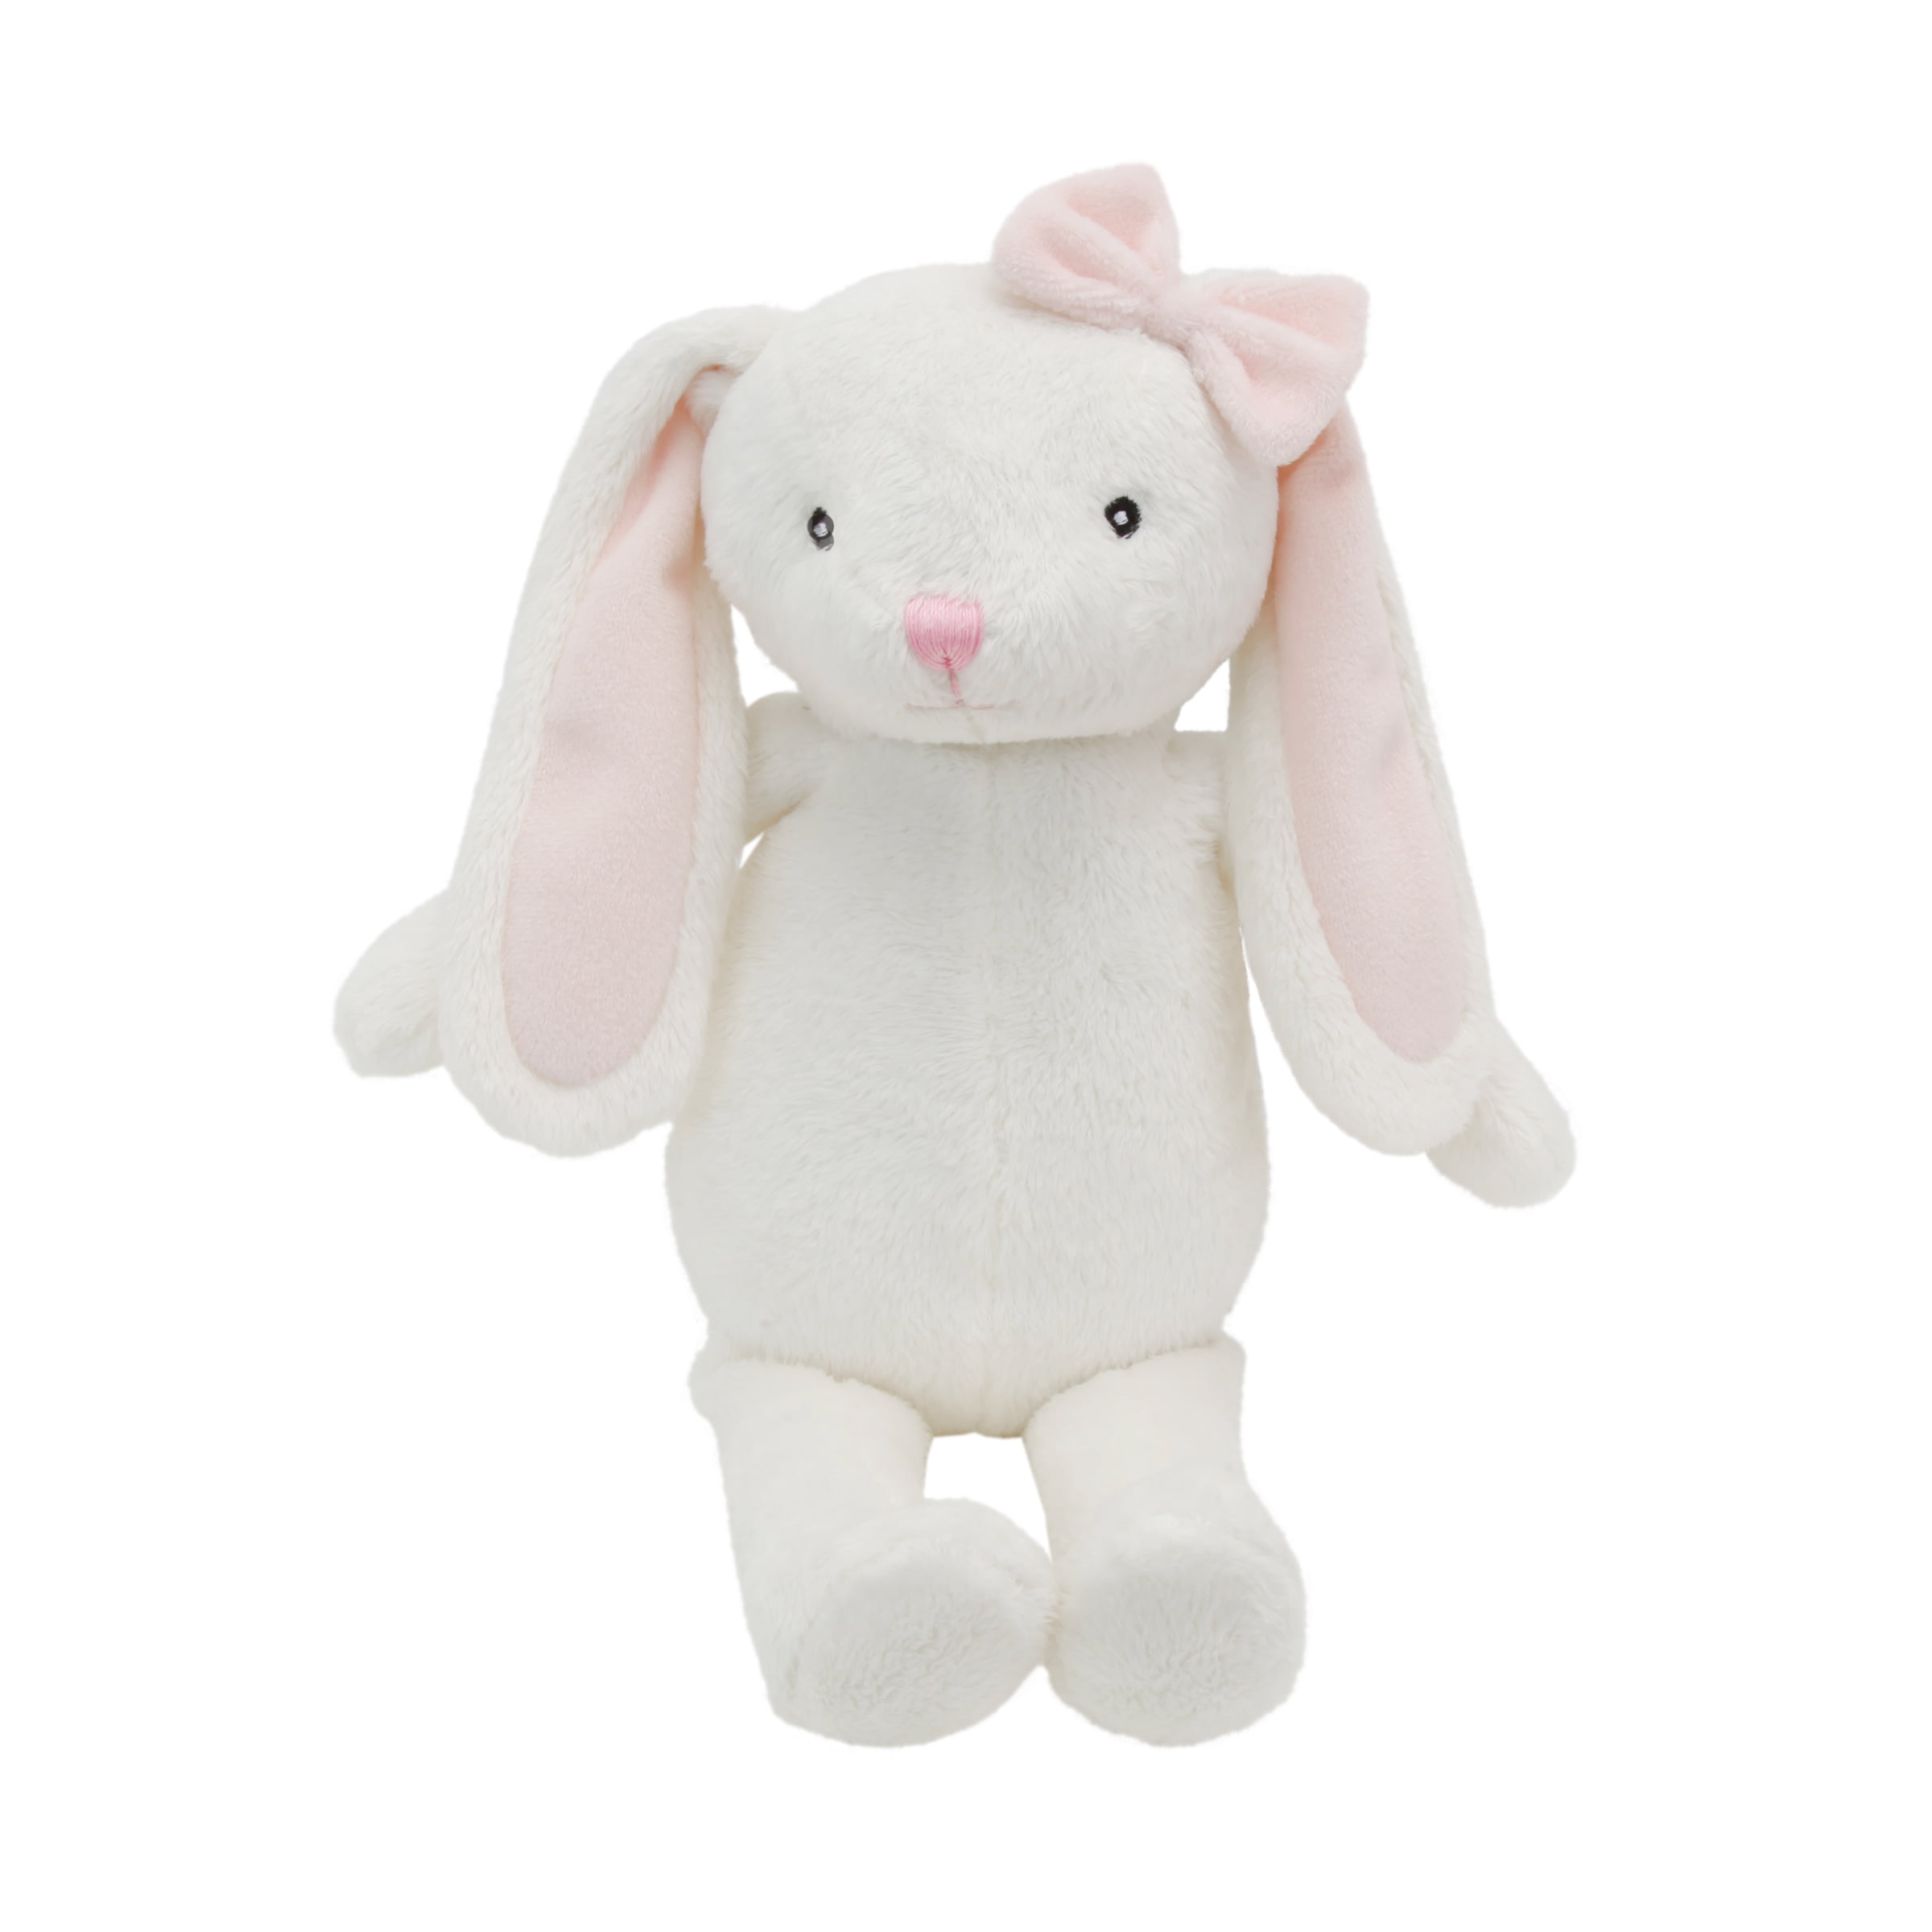 A Lovey Story Character Bun Bun Plush Bunny Doll Soft Stuffed Animal Toy